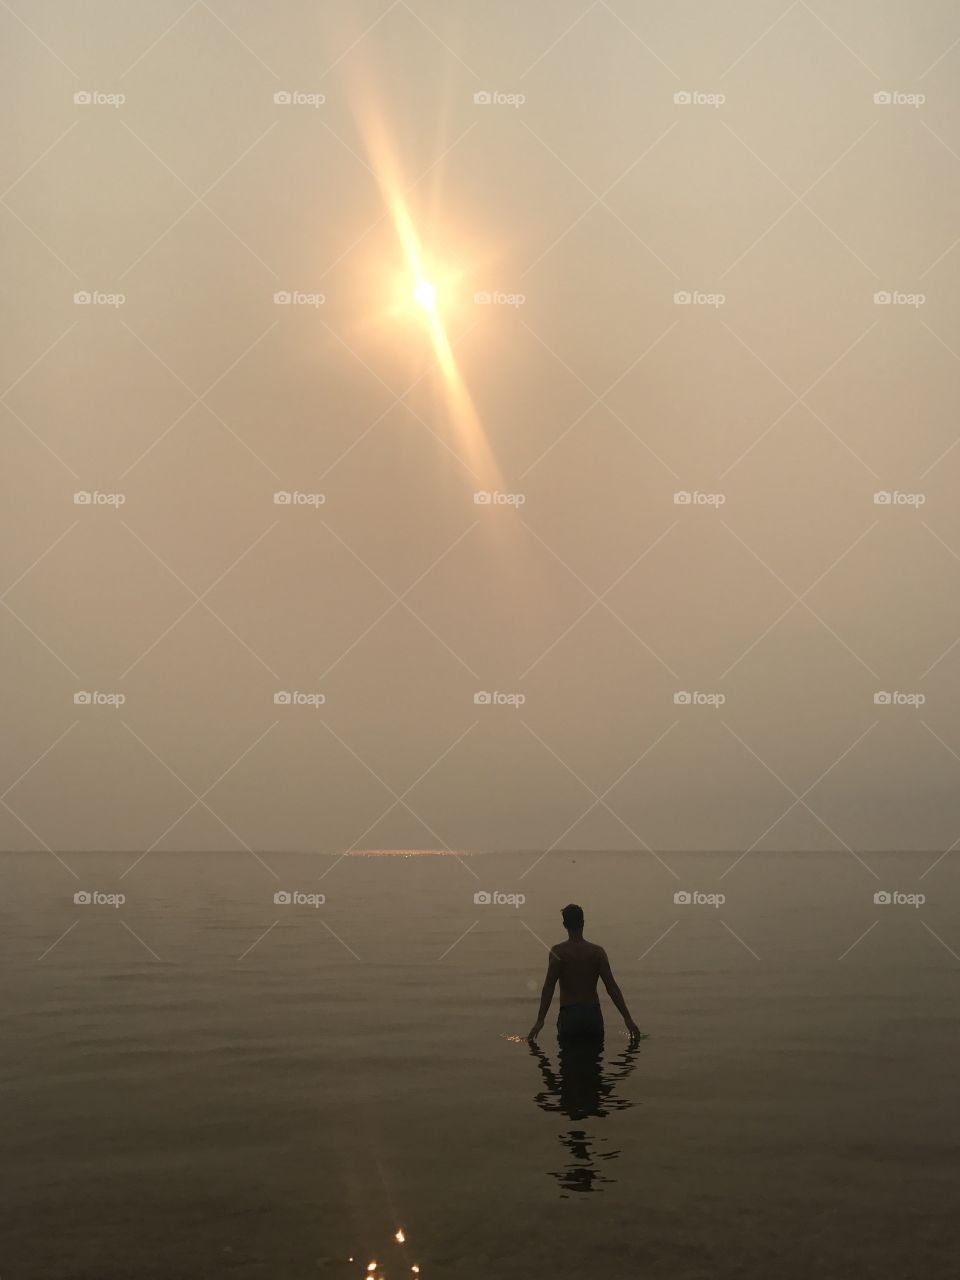 Smokey, hazy swim in BC during wildfire season